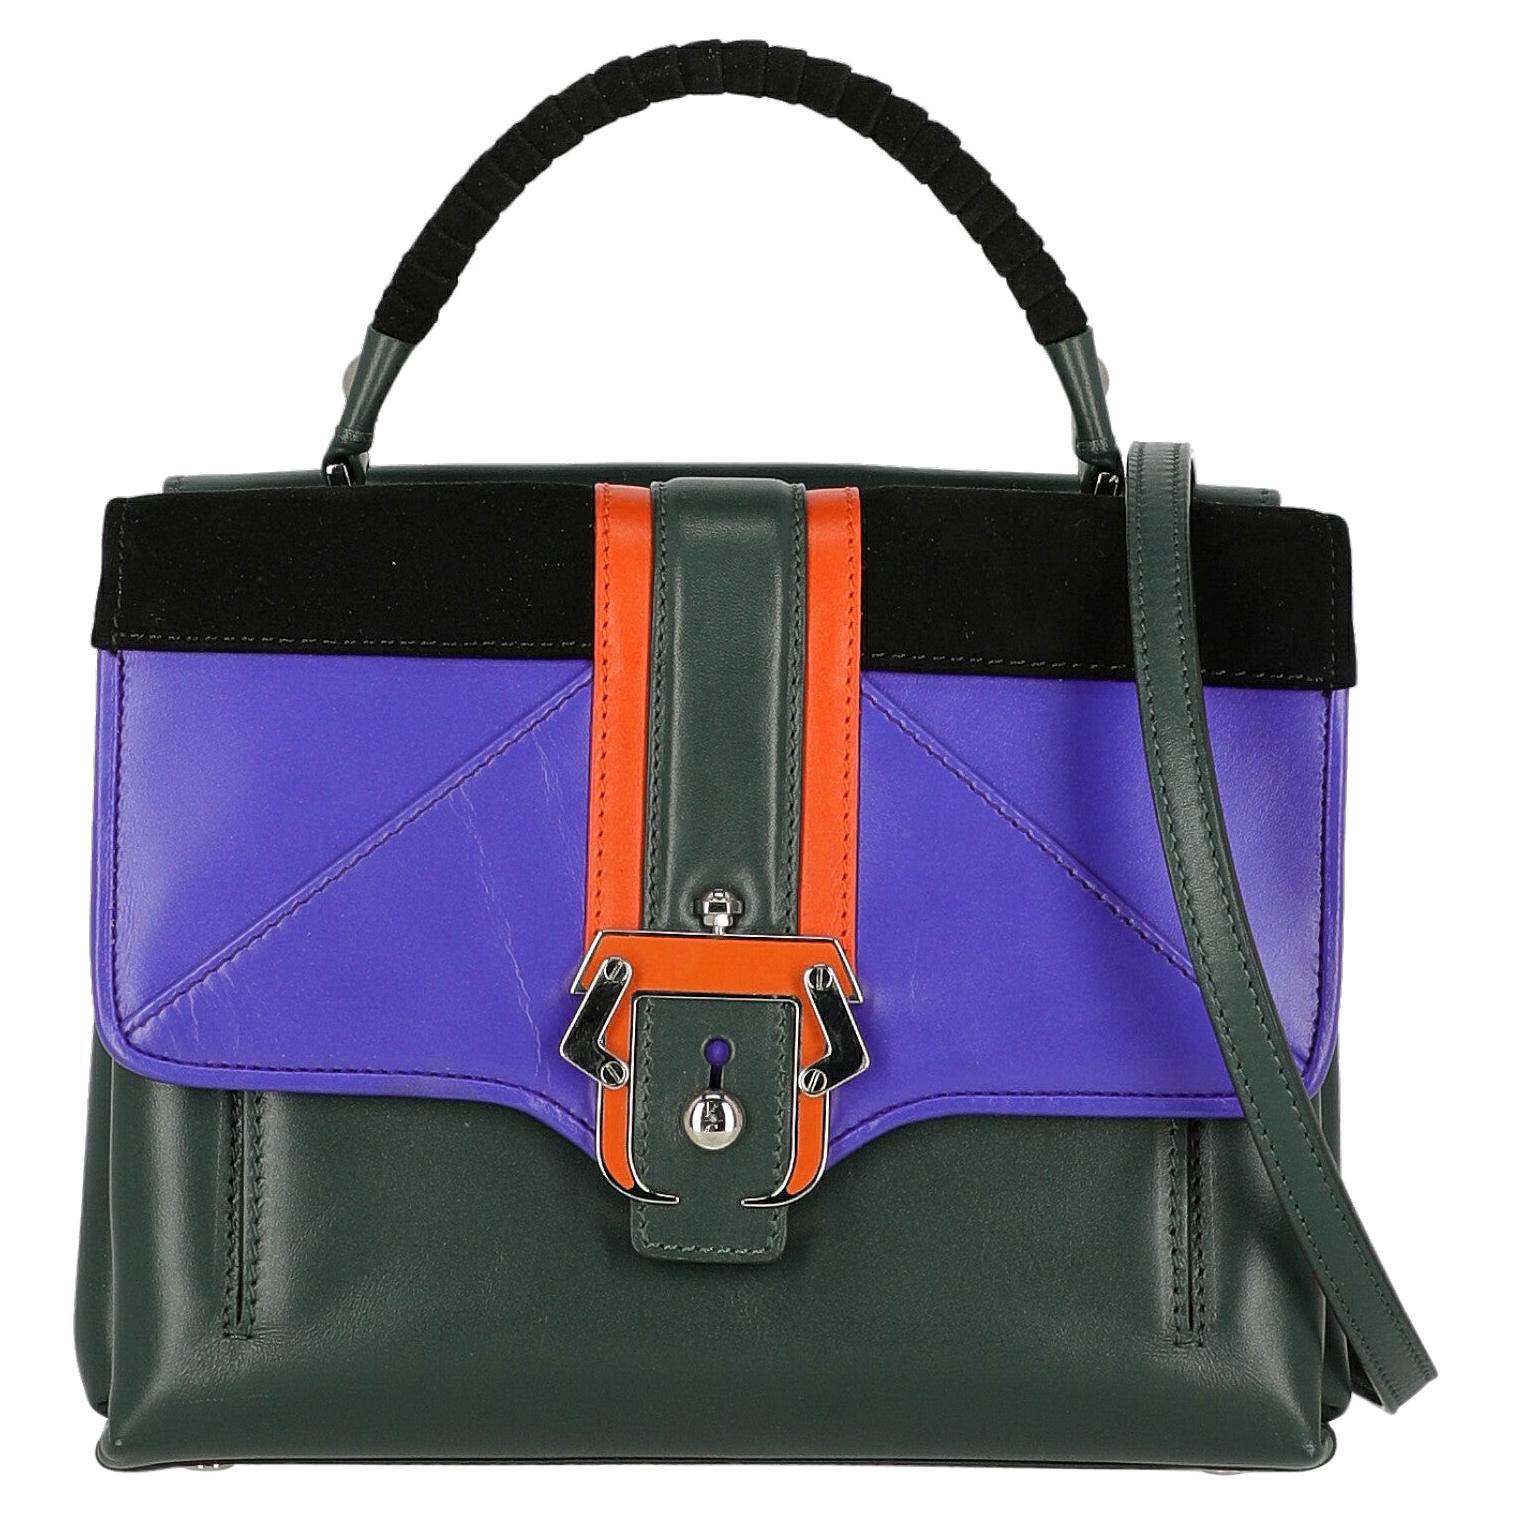 Paula Cademartori  Women   Shoulder bags   Black, Green, Purple Leather  For Sale